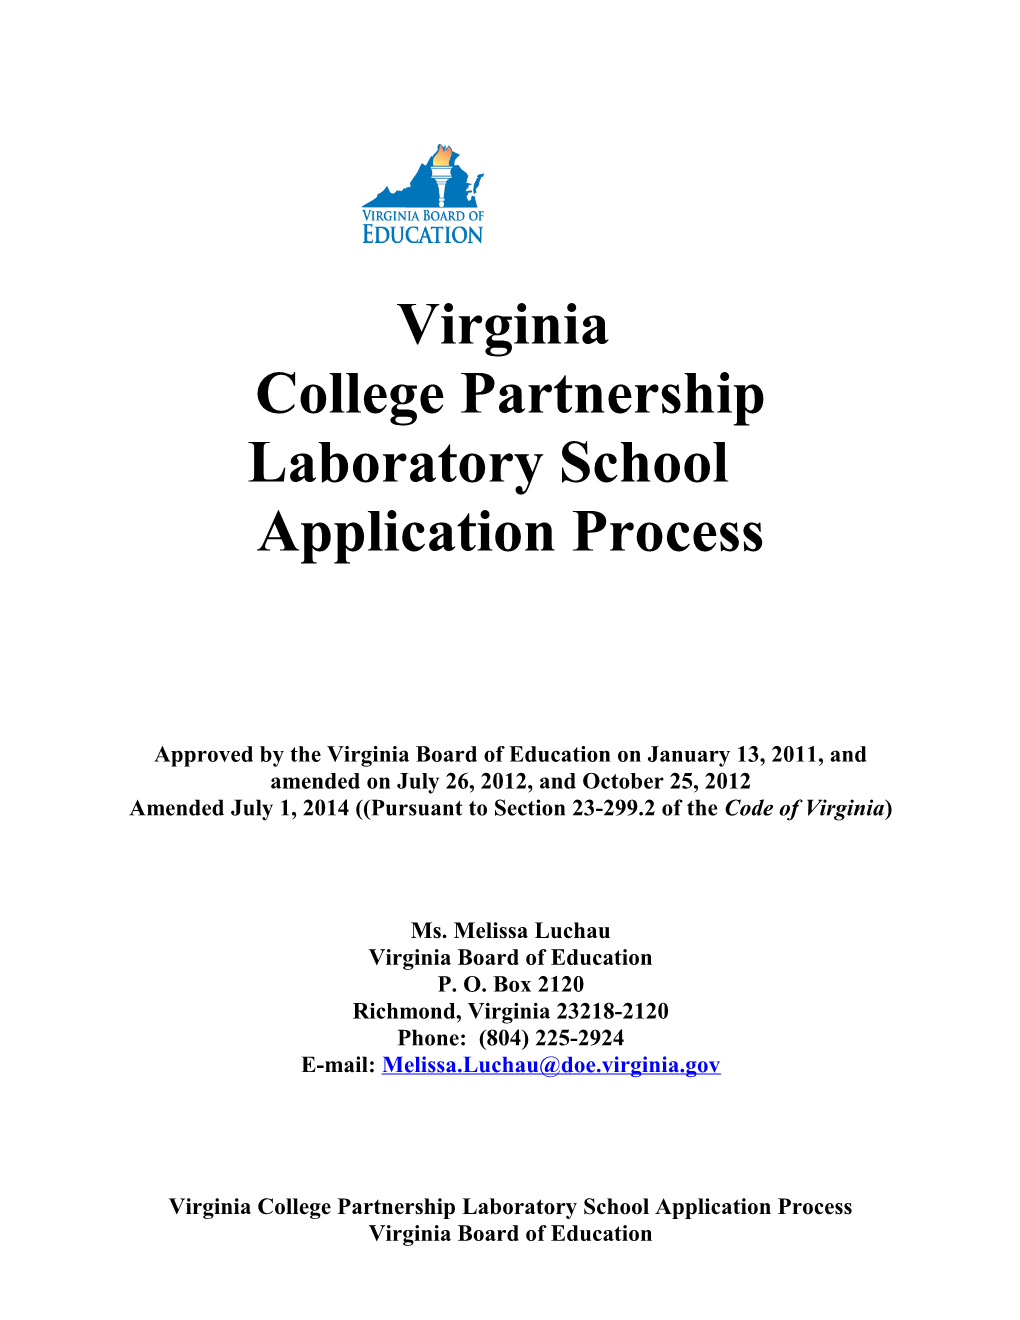 College Partnership Laboratory School